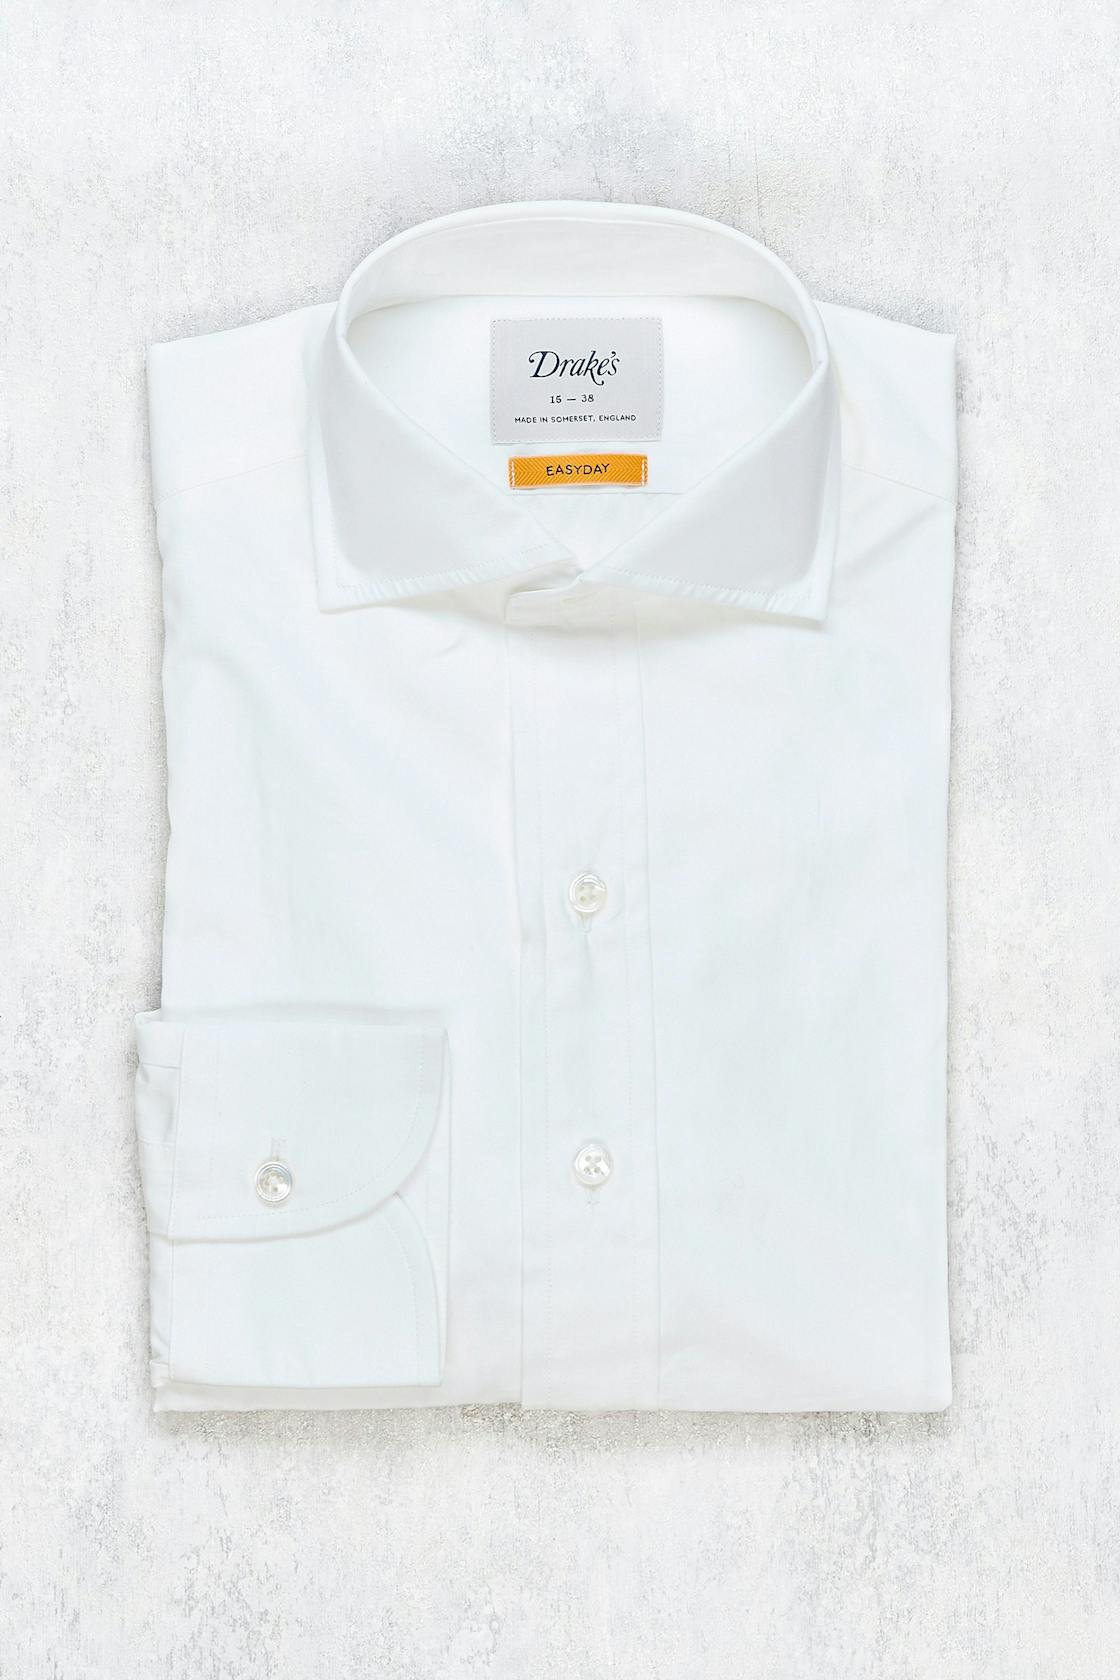 Drake's Easyday White Cotton Spread Collar Shirt